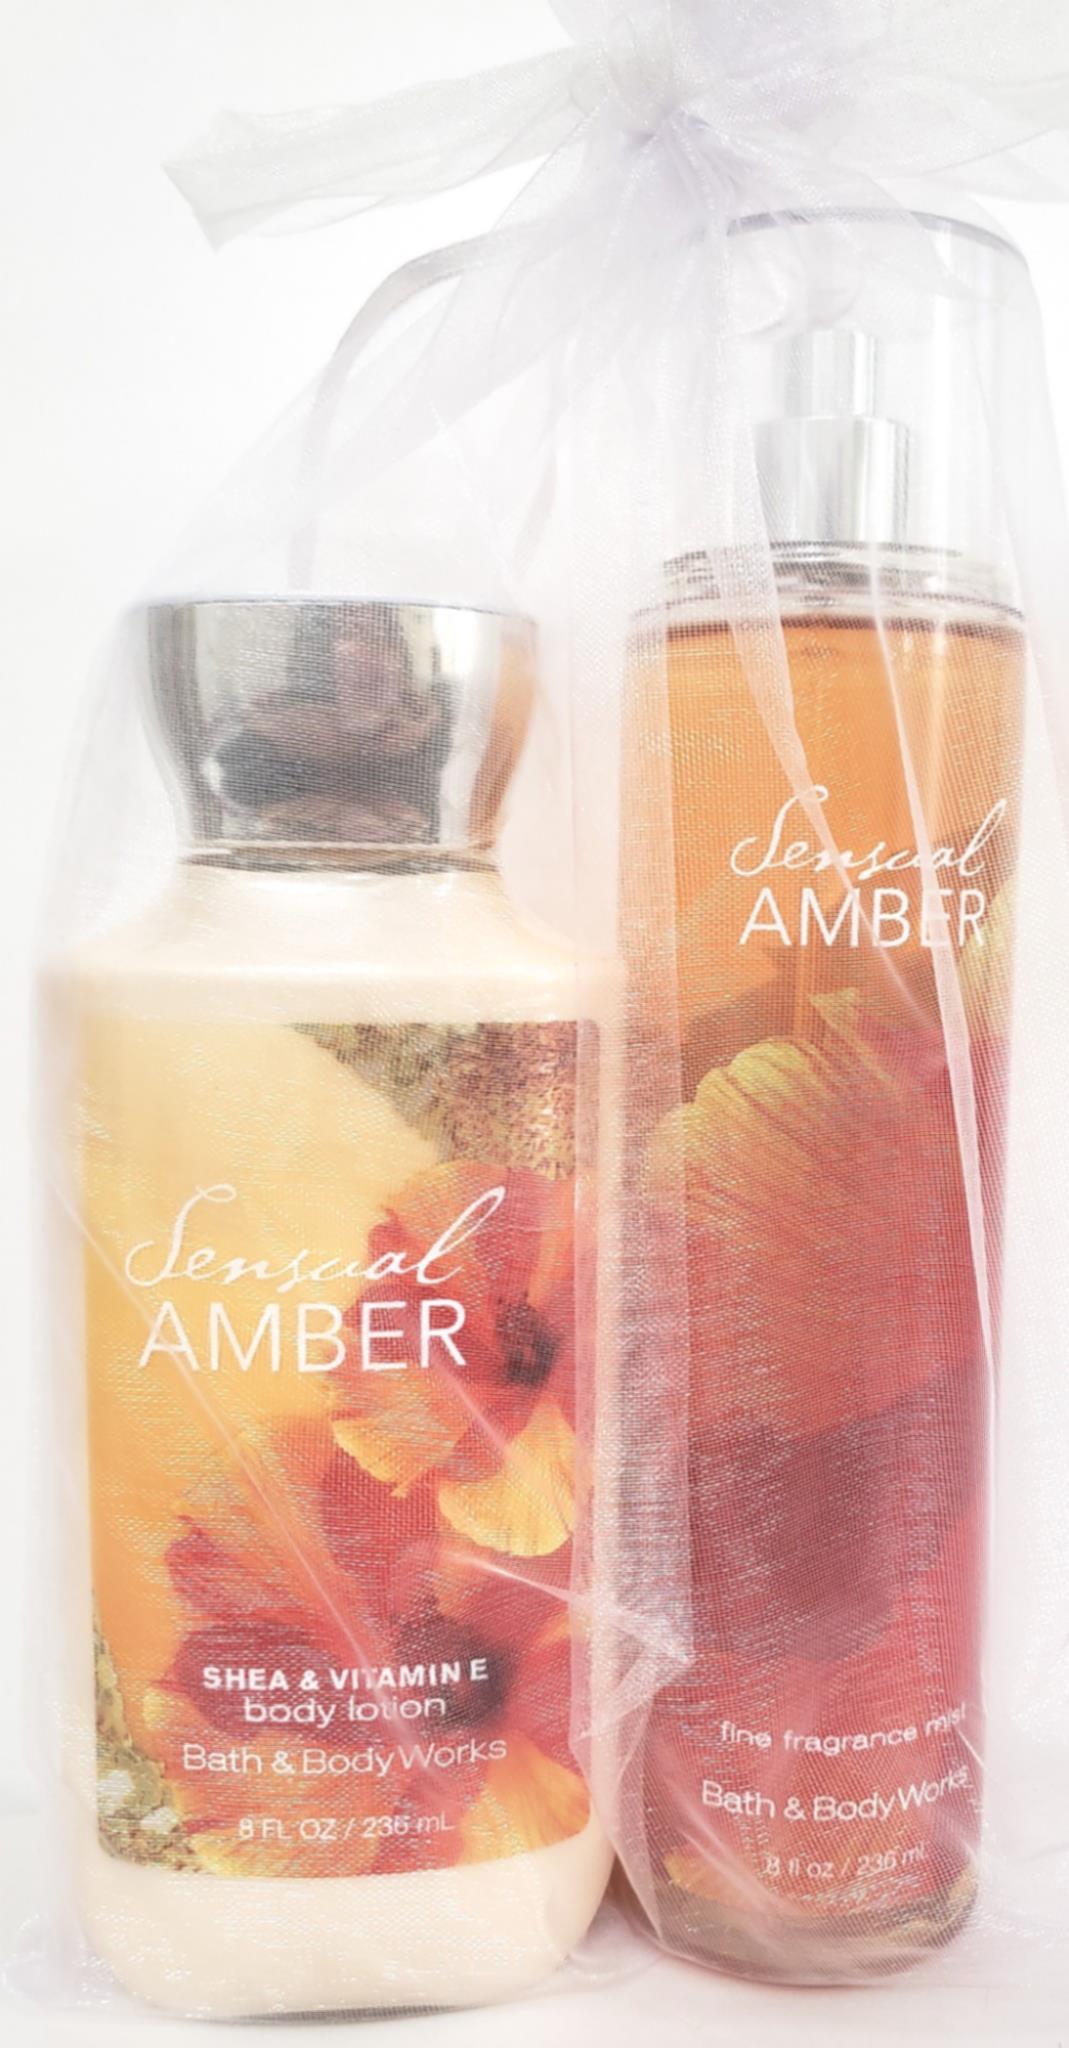 Bath & Body Works Sensual Amber Body Shower Gel (Pack of 2)